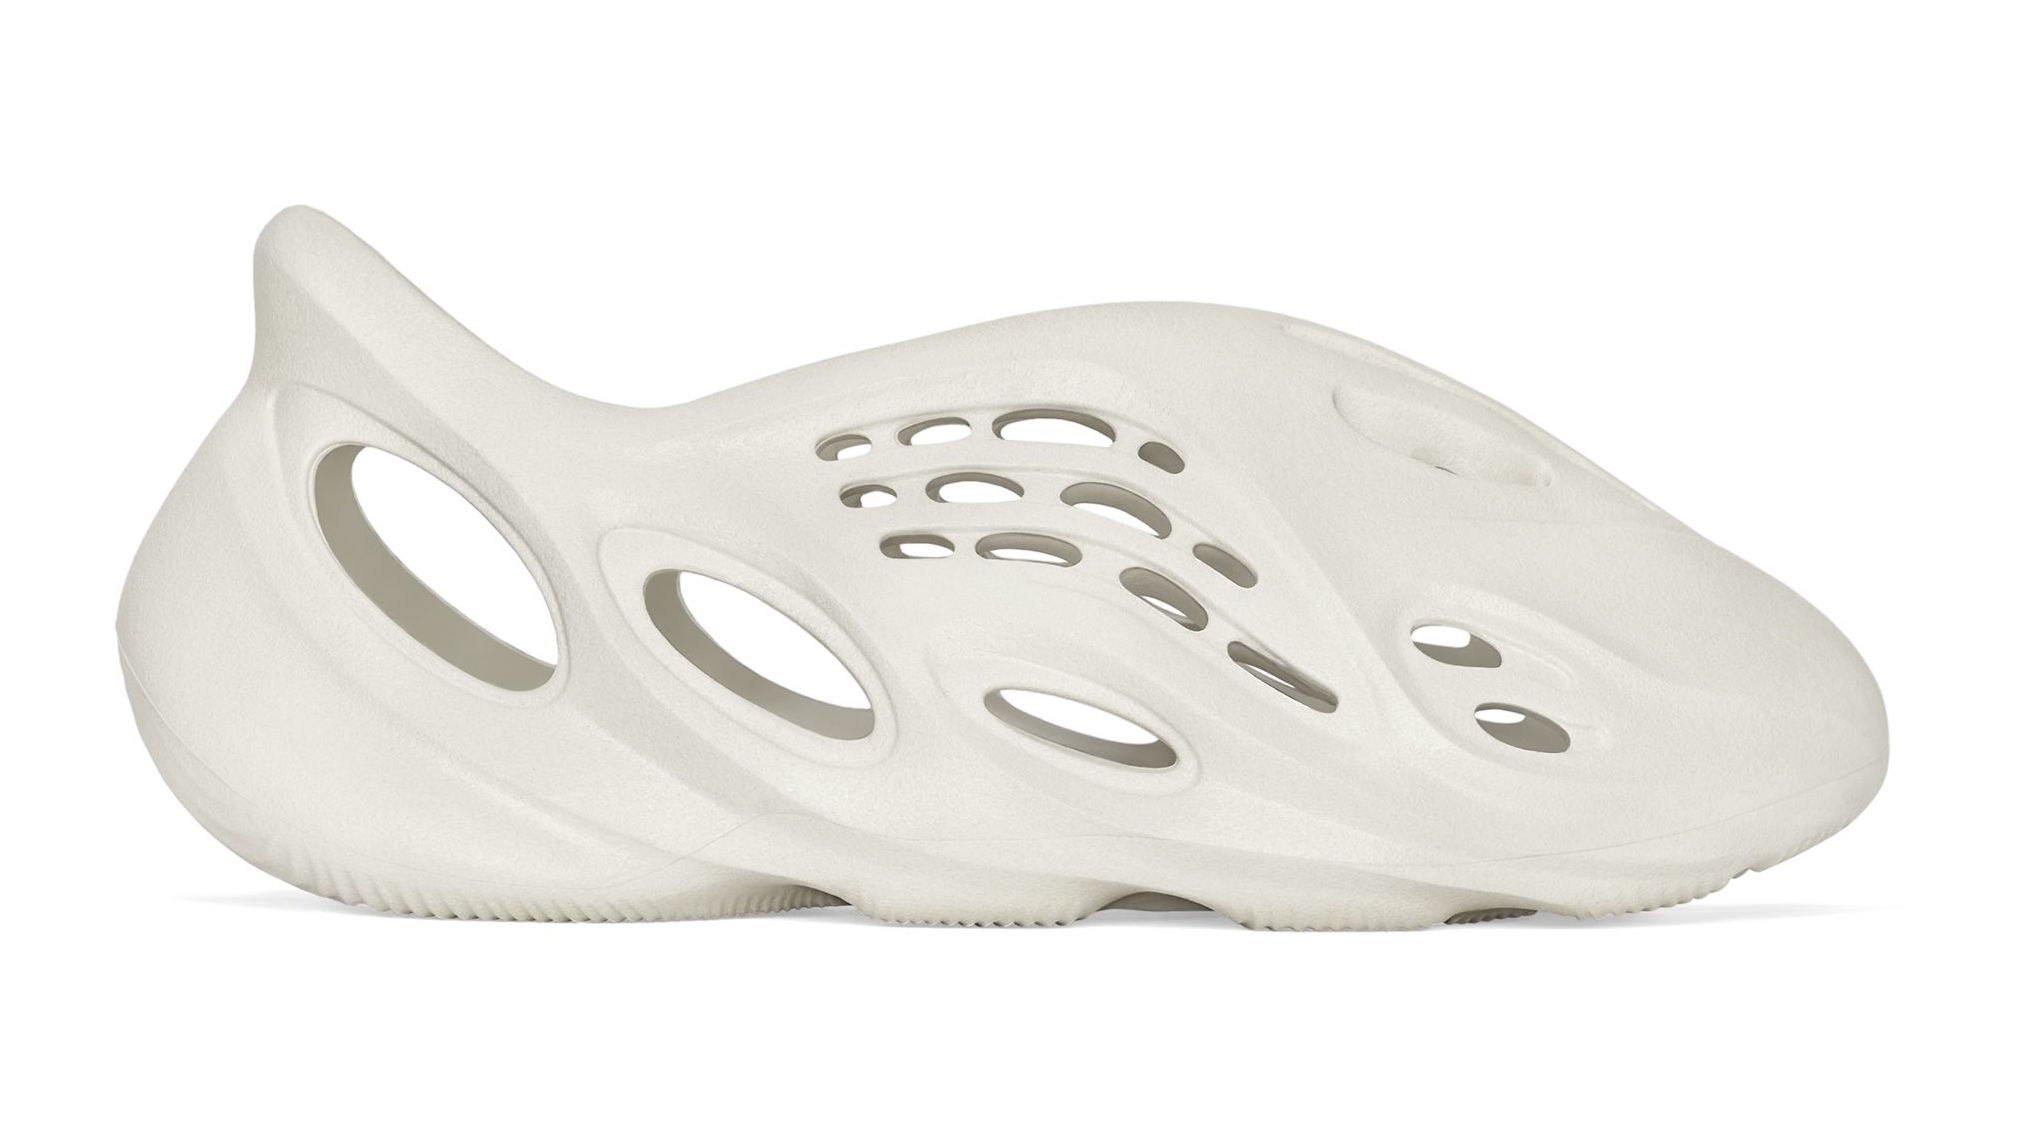 Adidas Yeezy Foam Runner White G55486